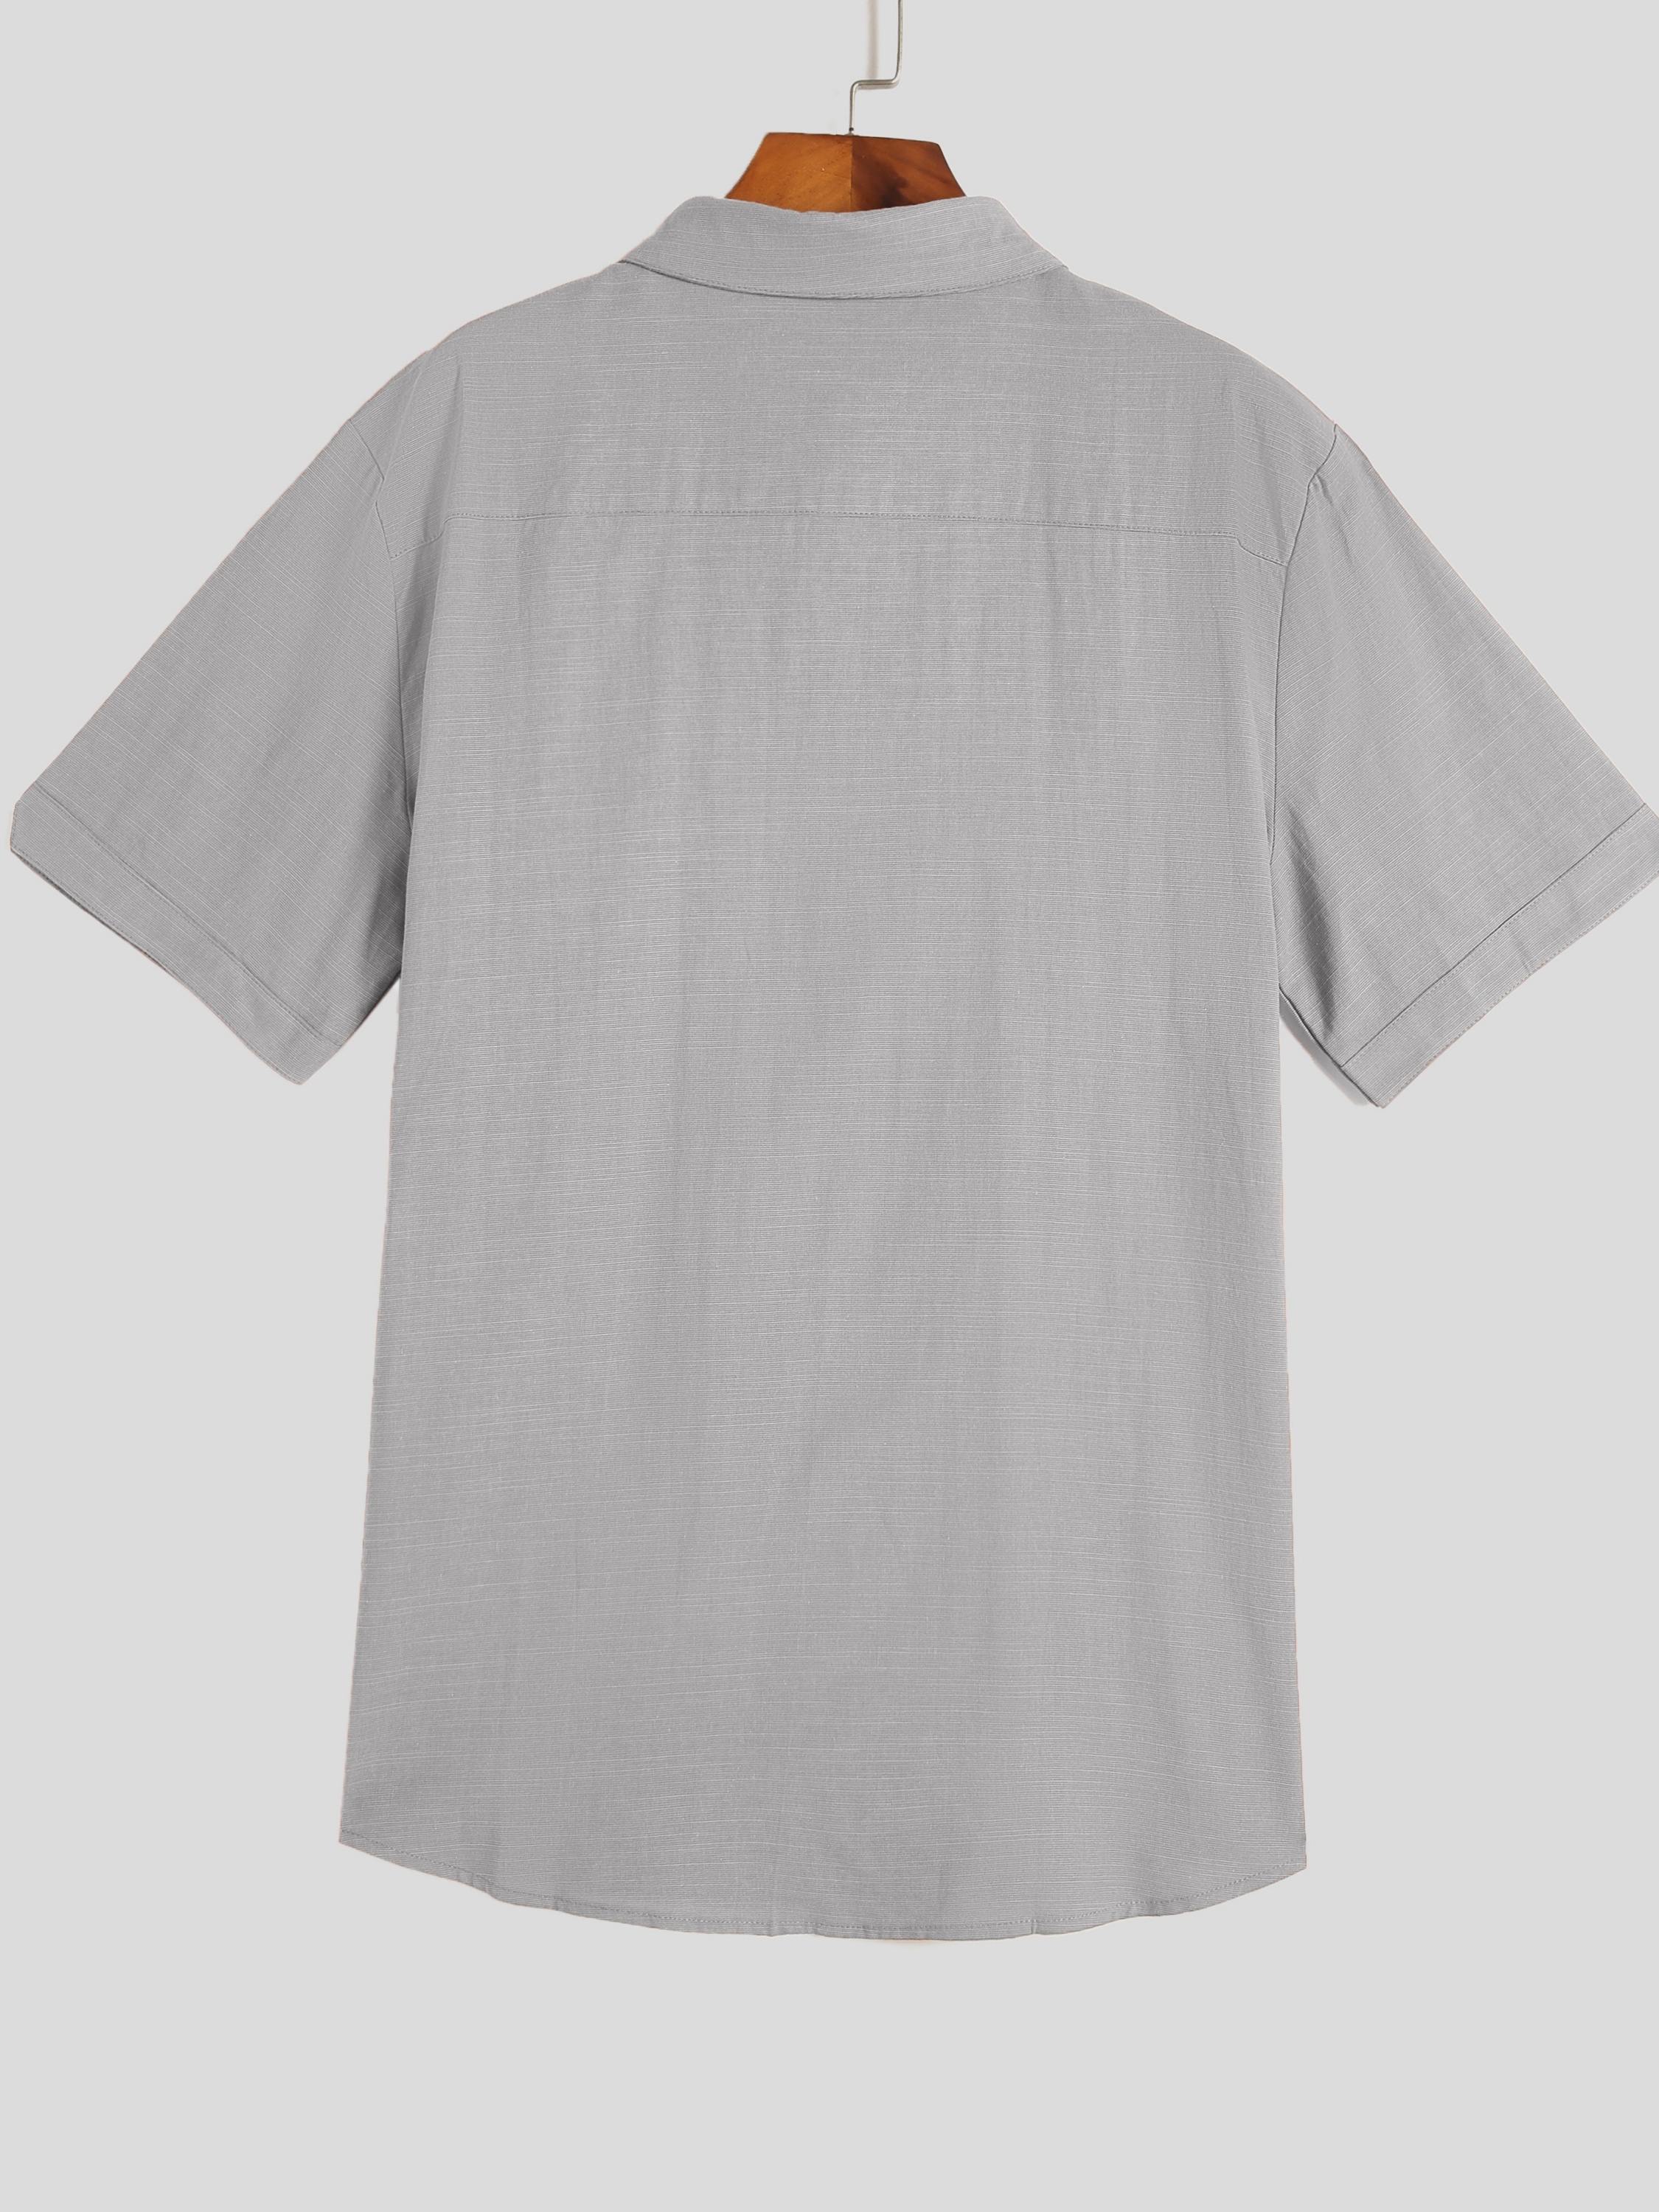 XMMSWDLA Mens Short Sleeve Shirts Button Down Tops Fishing Tees Spread  Collar Plain Summer Blouses Gray Tee Shirts Mens 